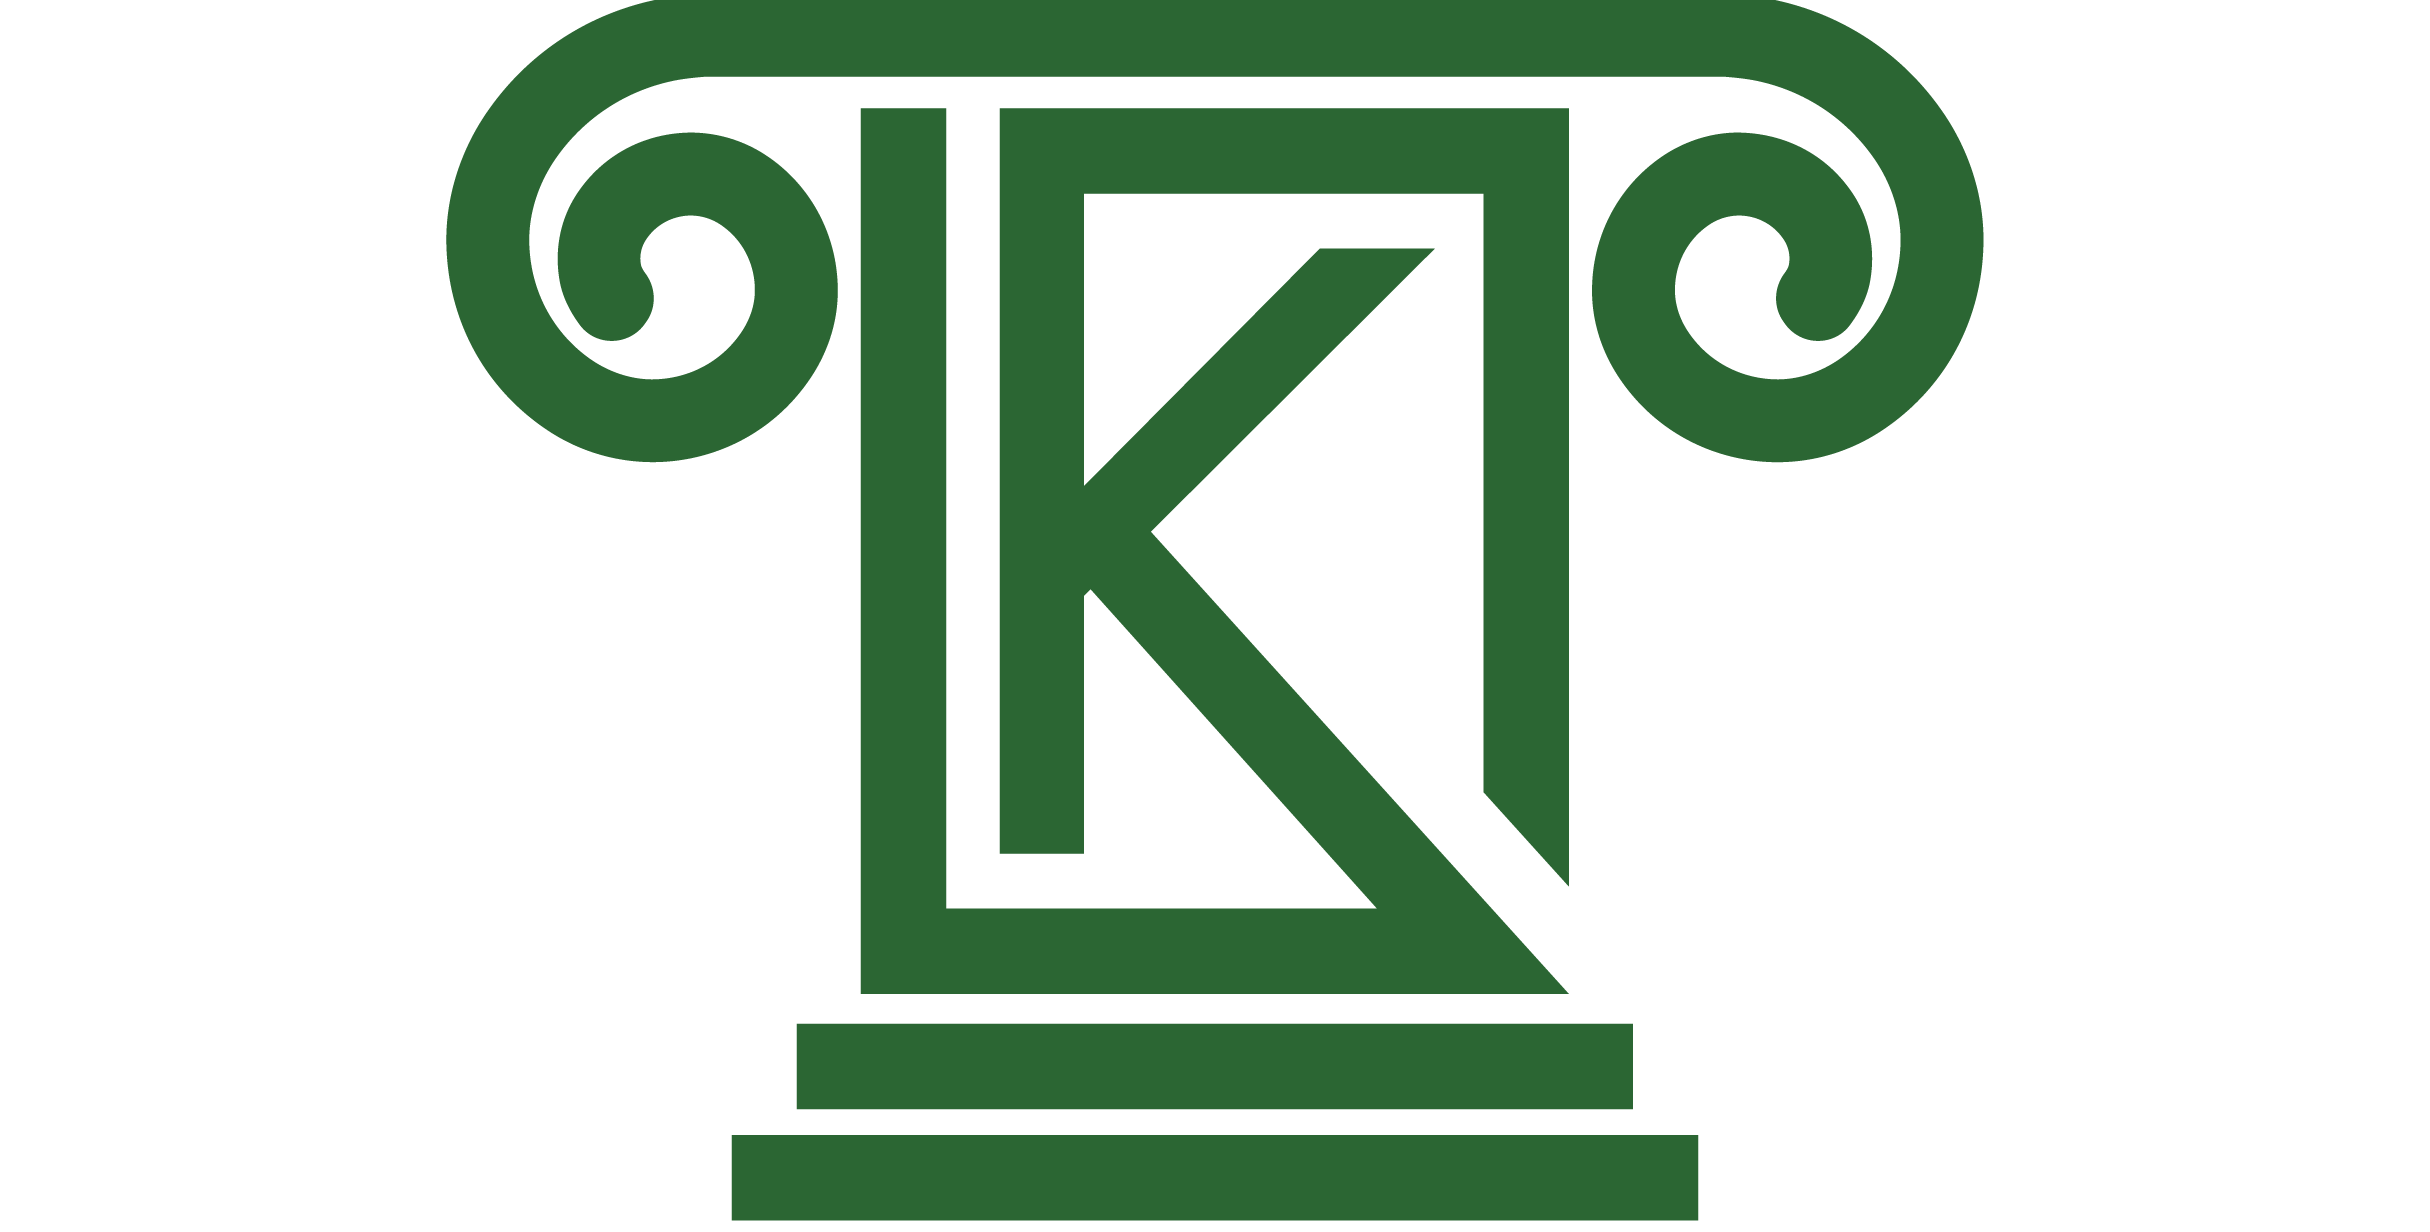 Kecser KANCELARIA ADWOKACKA logo